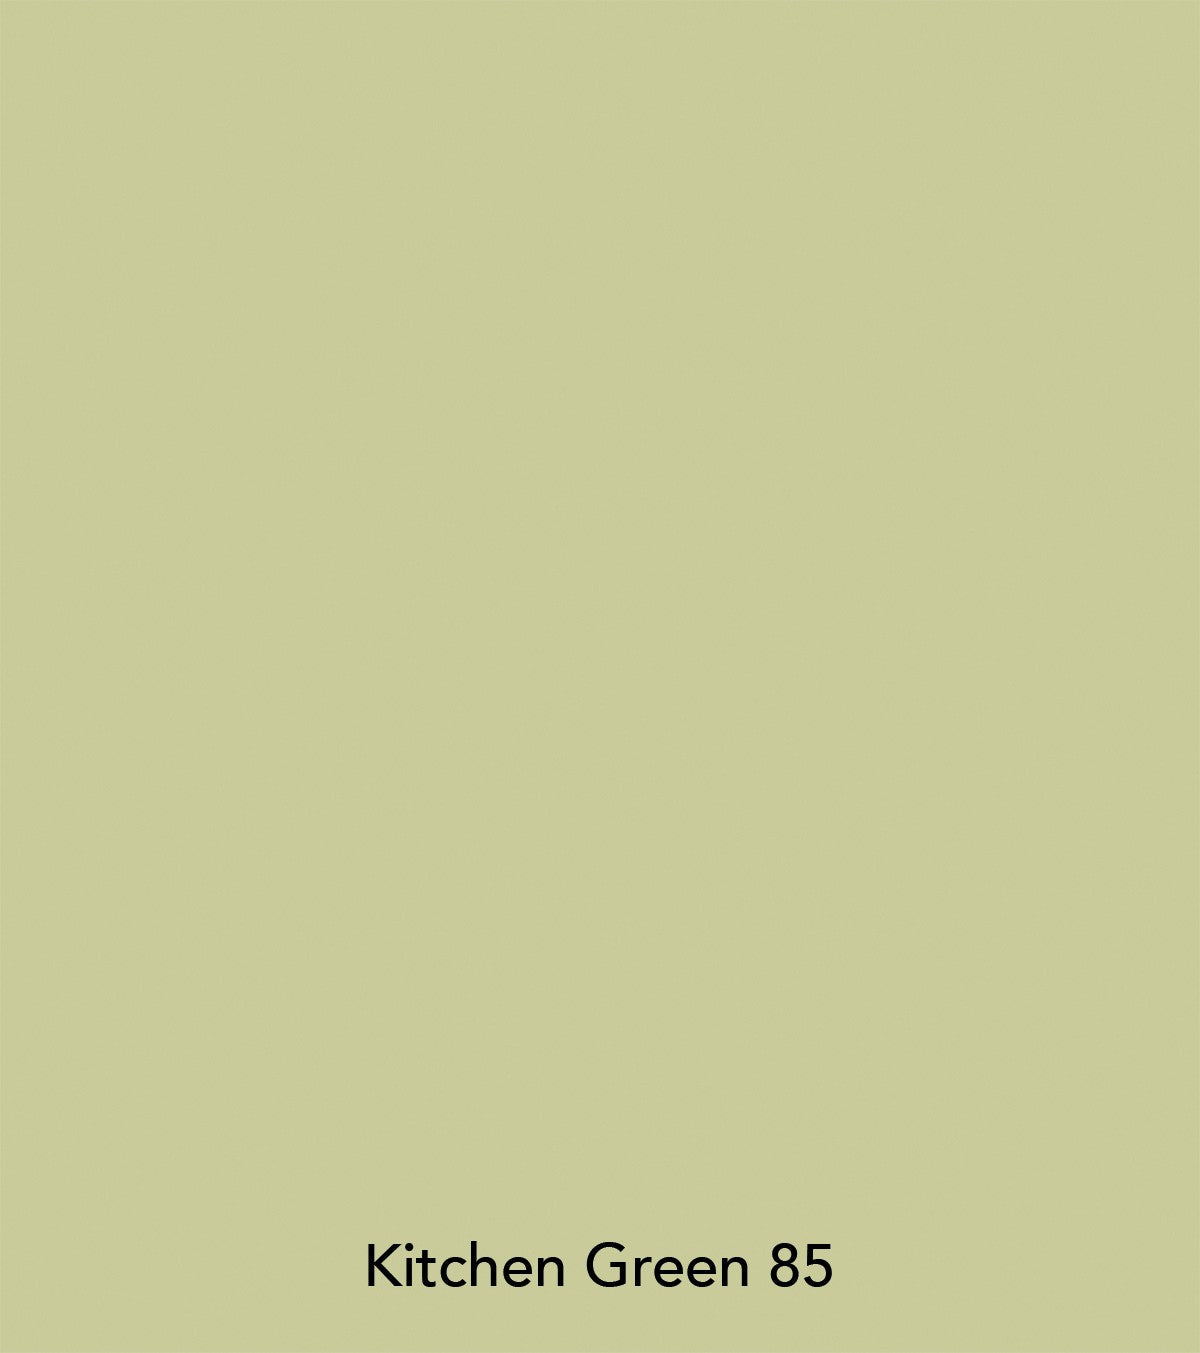 Little Greene paint - Kitchen Green (85)